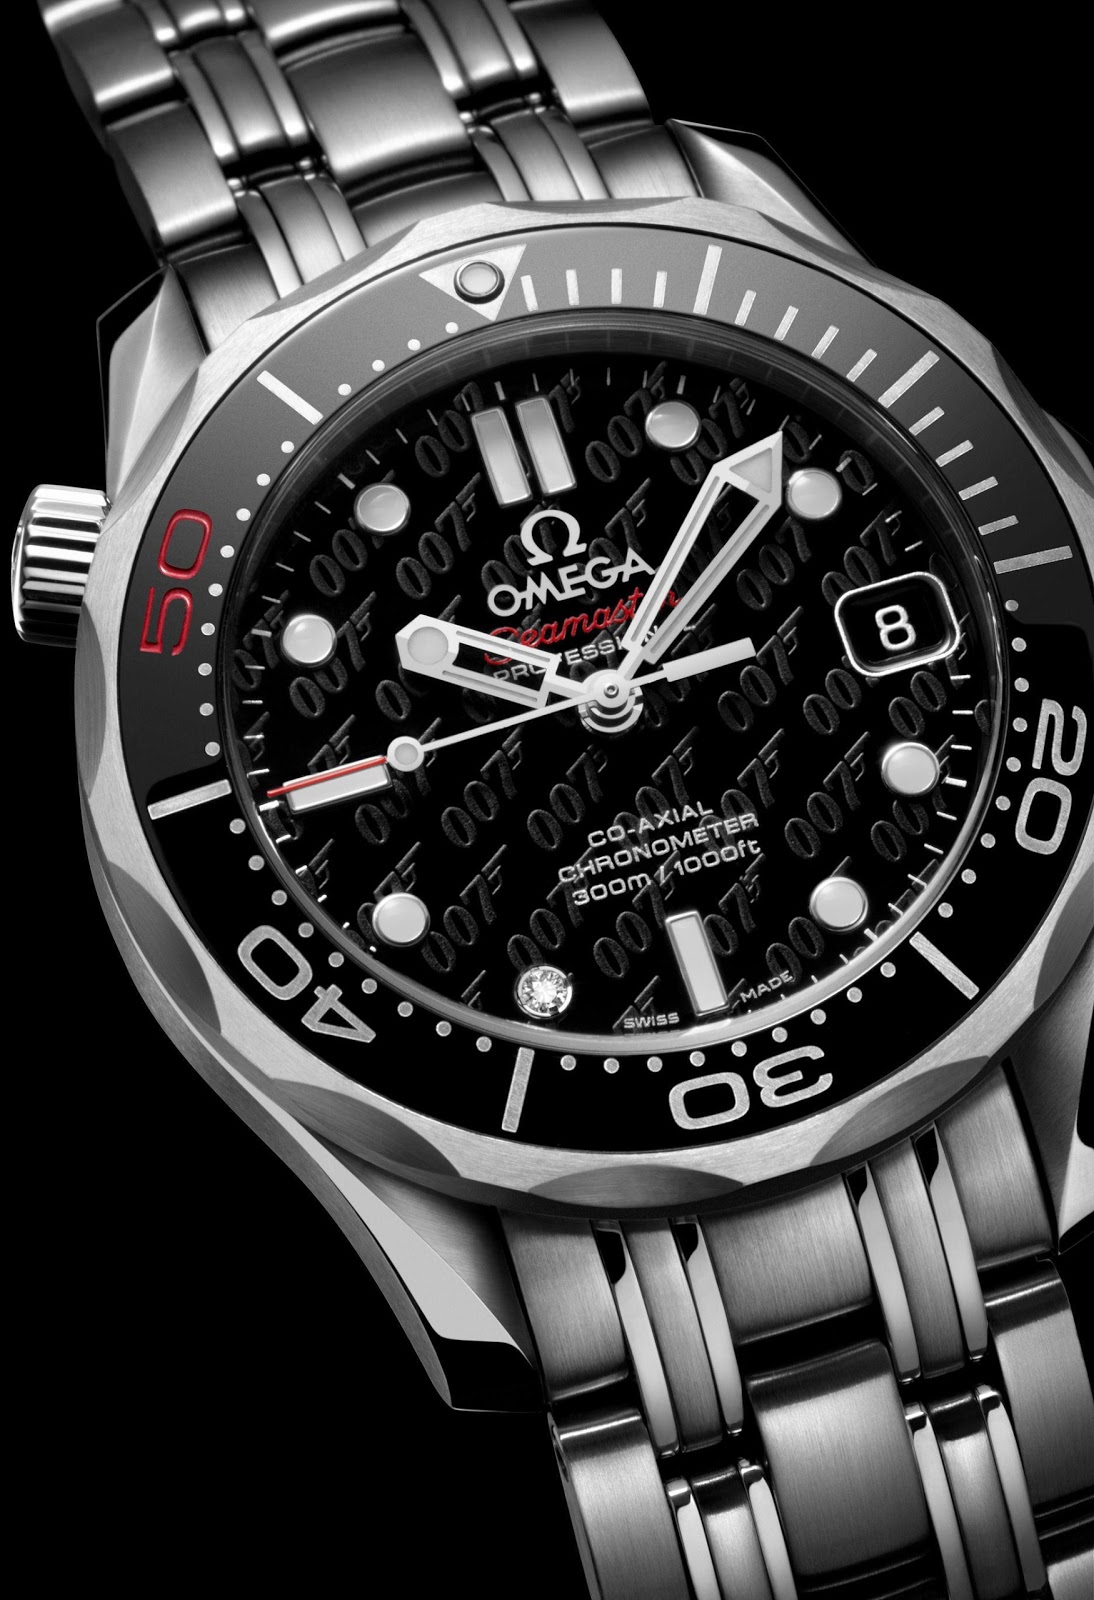 Watchuseek Watch Blog: Omega James Bond 007 50th anniversary watch